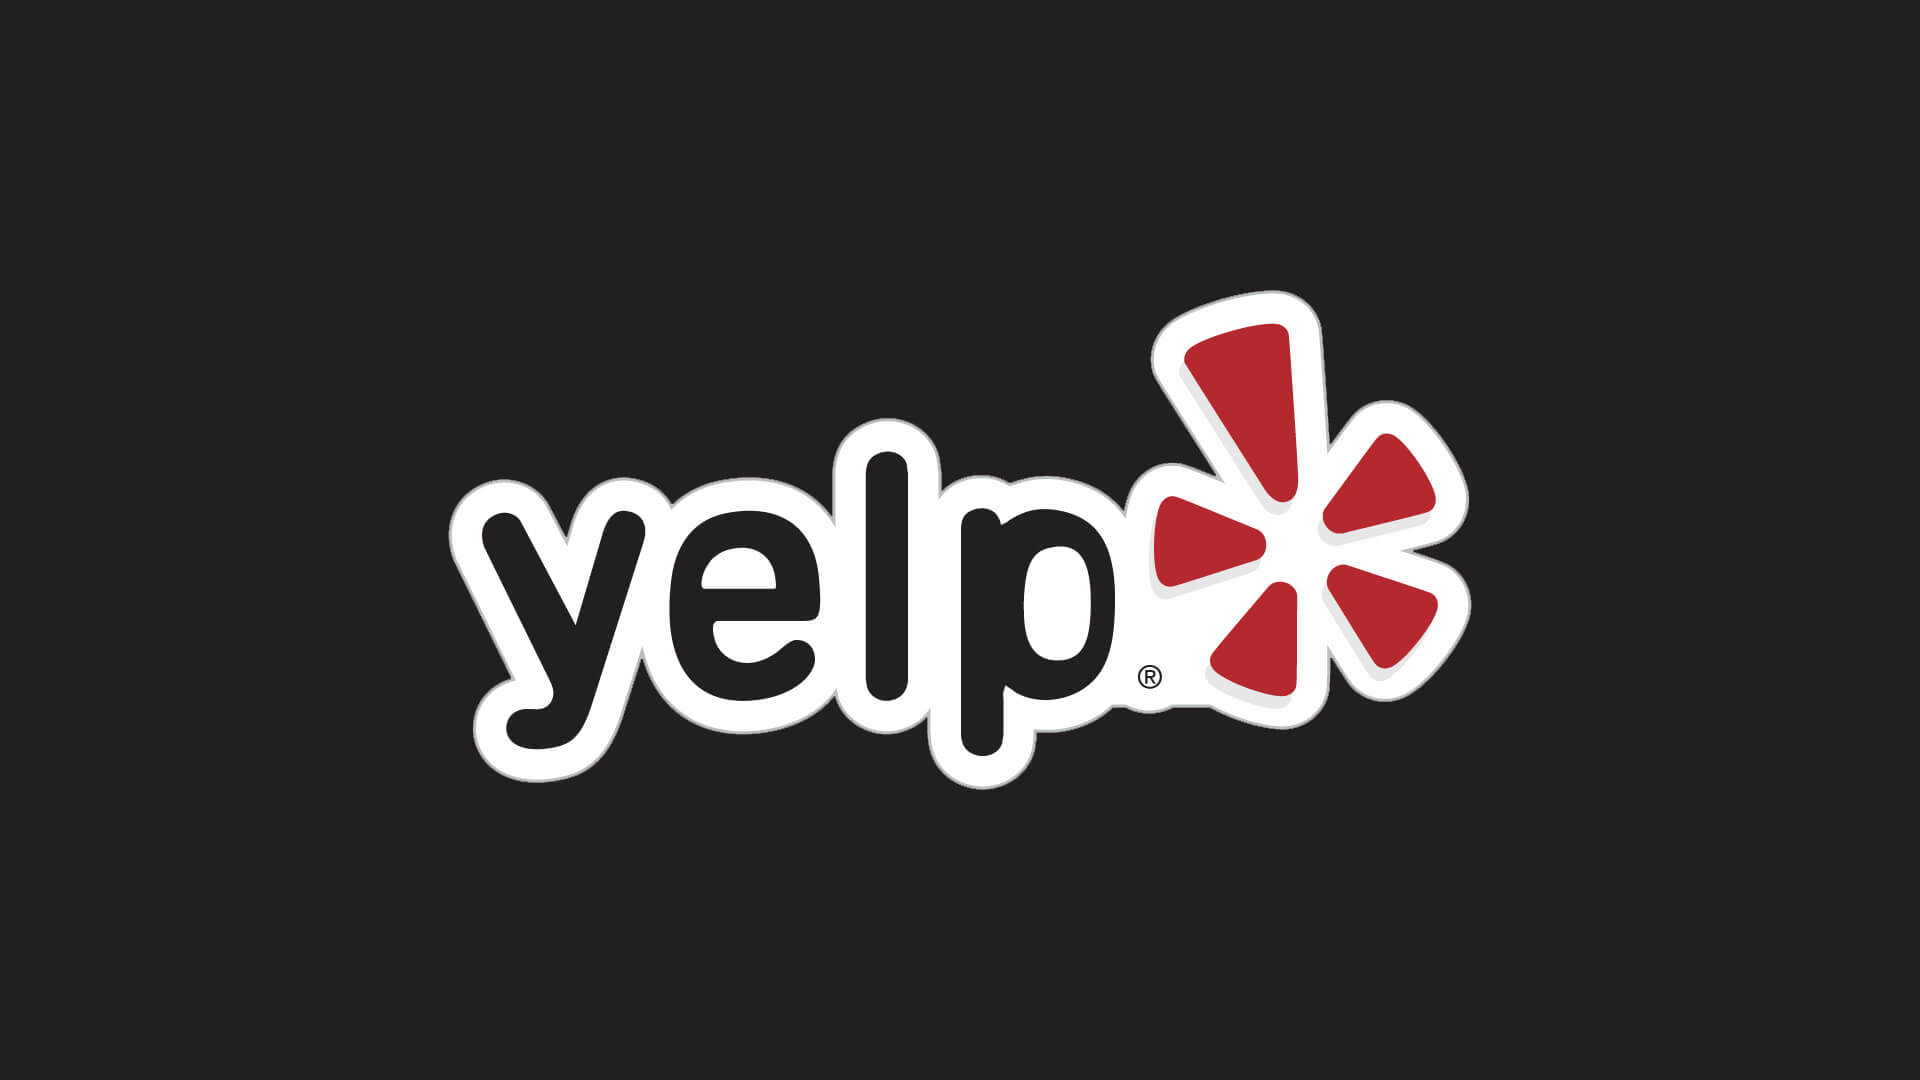 Custom color yelp 3 icon - Free site logo icons